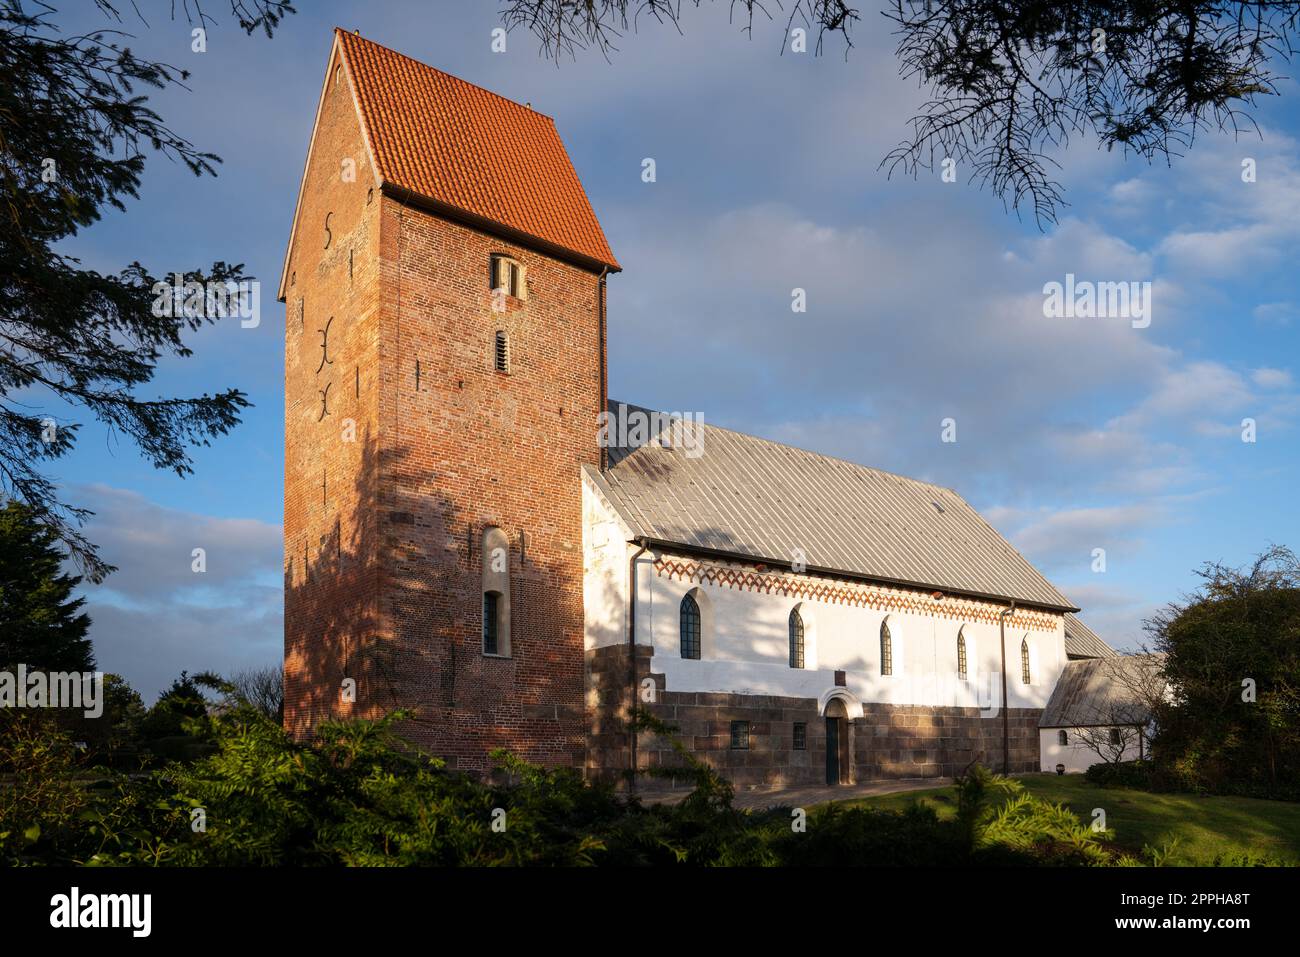 Church, Keitum, Sylt, Germany Stock Photo